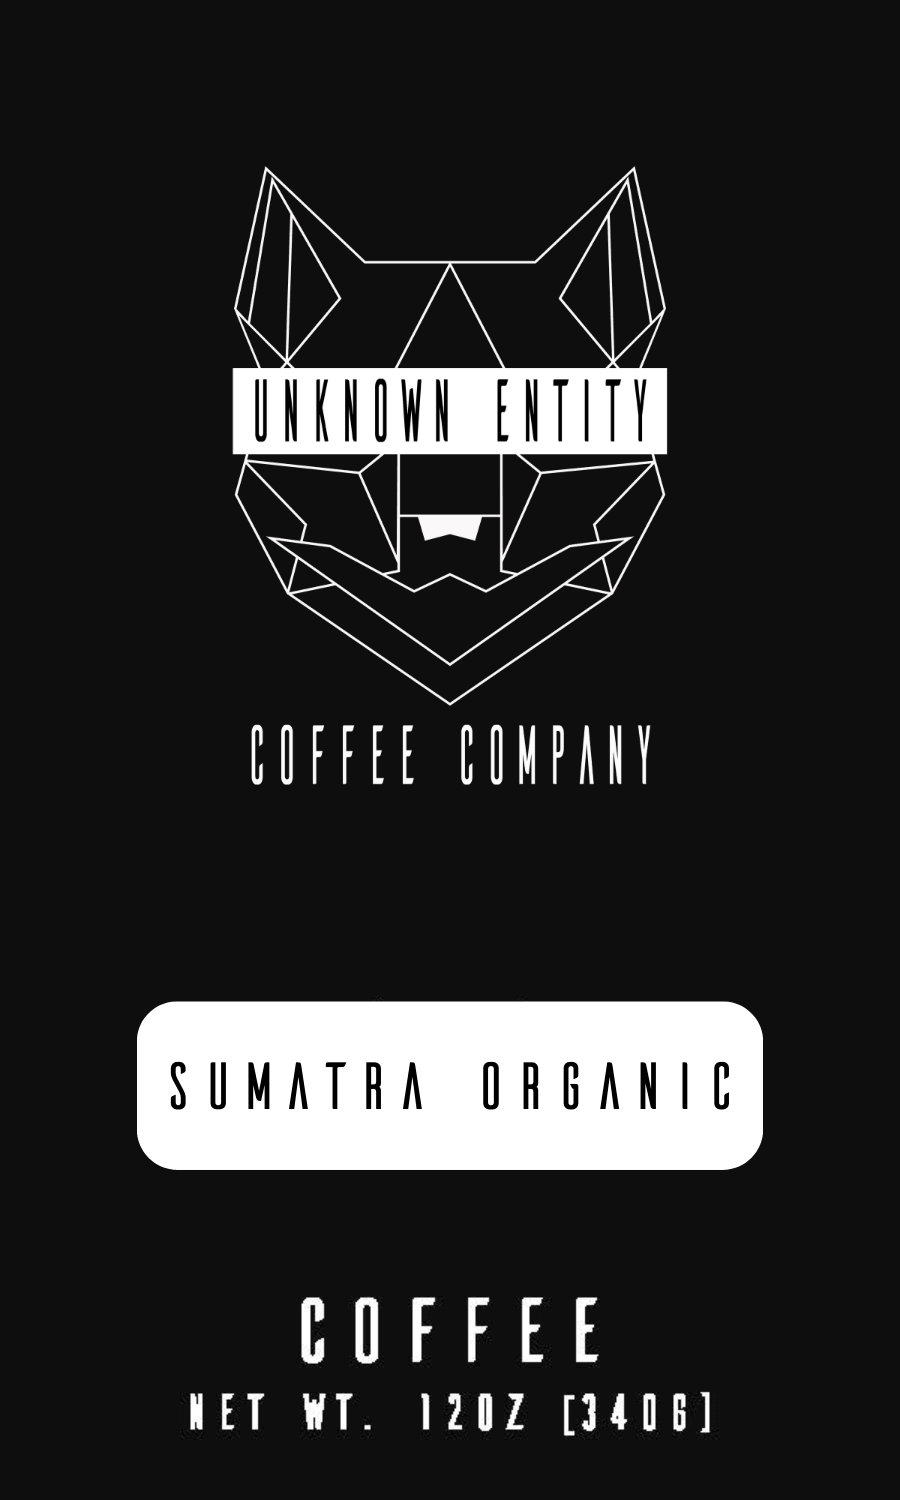 Pinpoint Series - Sumatra Mandheling Organic - Unknown Entity Coffee